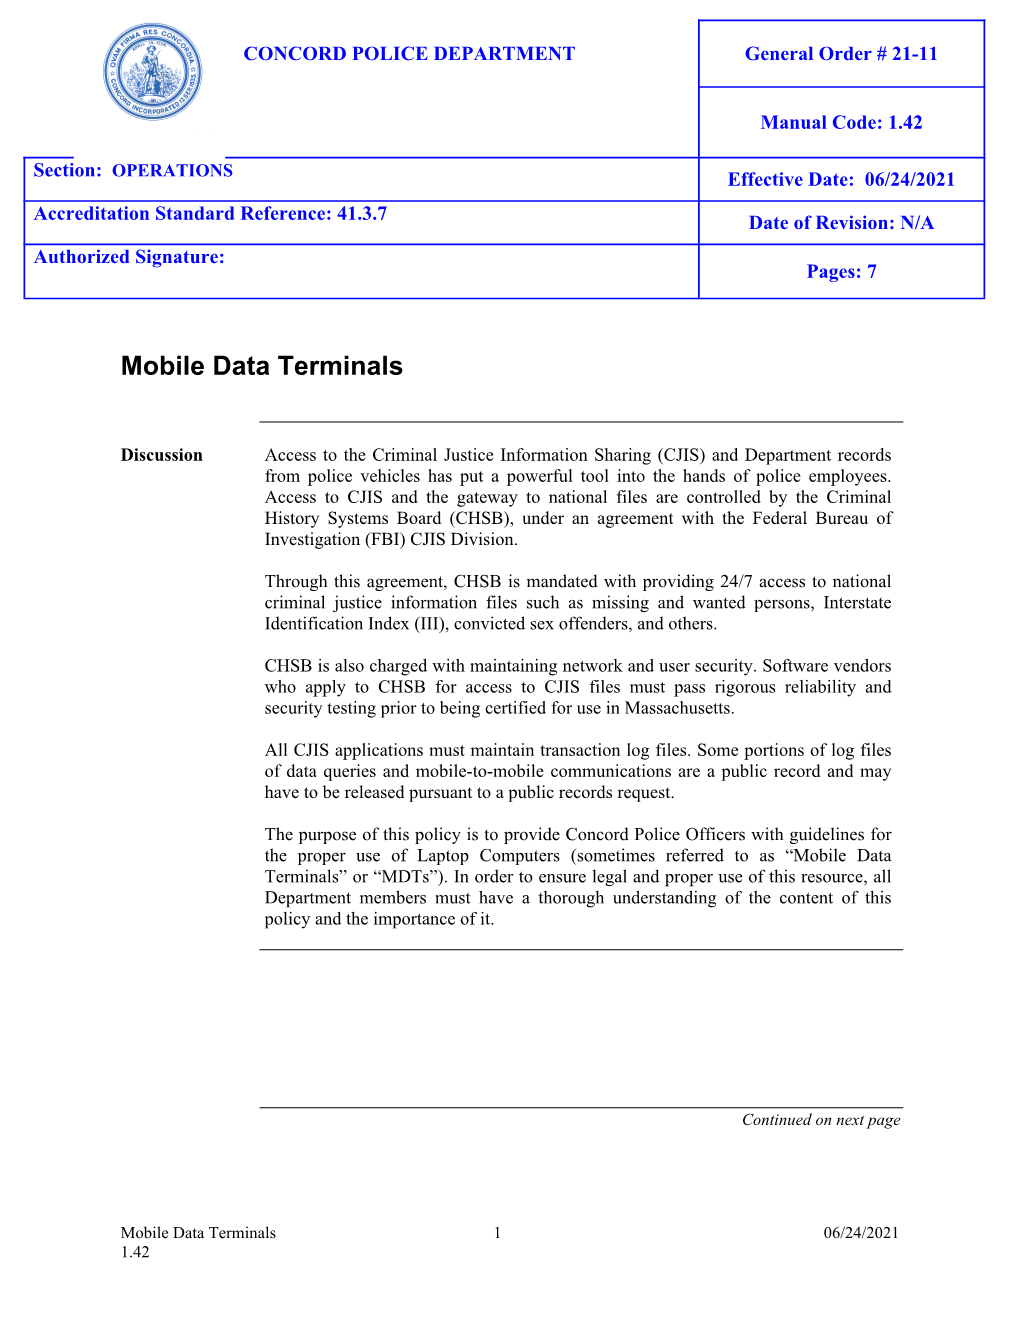 1.42 Mobile Data Terminals 06-24-2021 Final